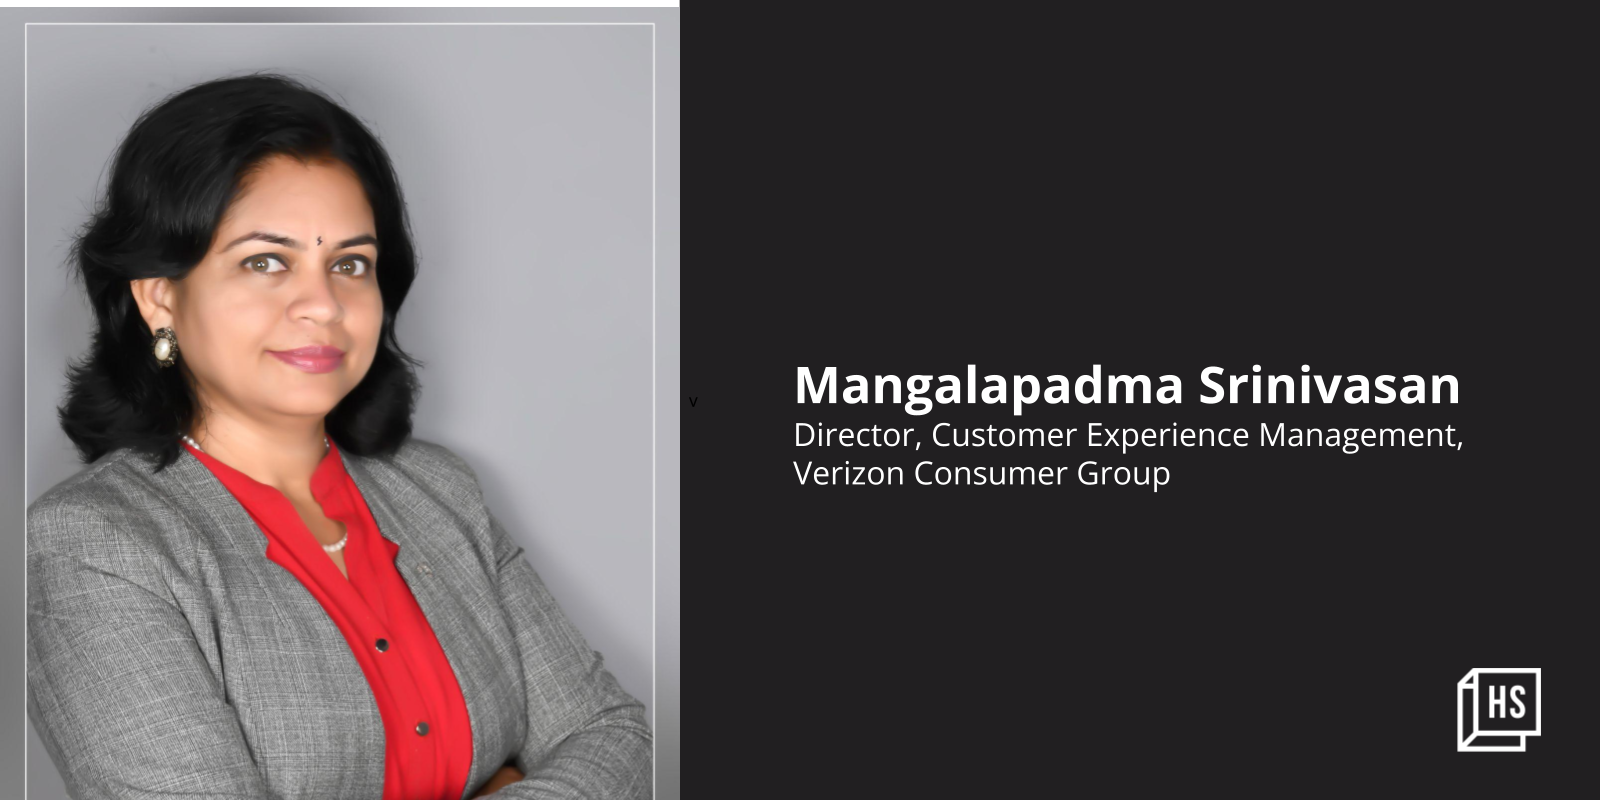 Own your life and career, leave inhibitions behind: Mangalapadma Srinivasan of Verizon India